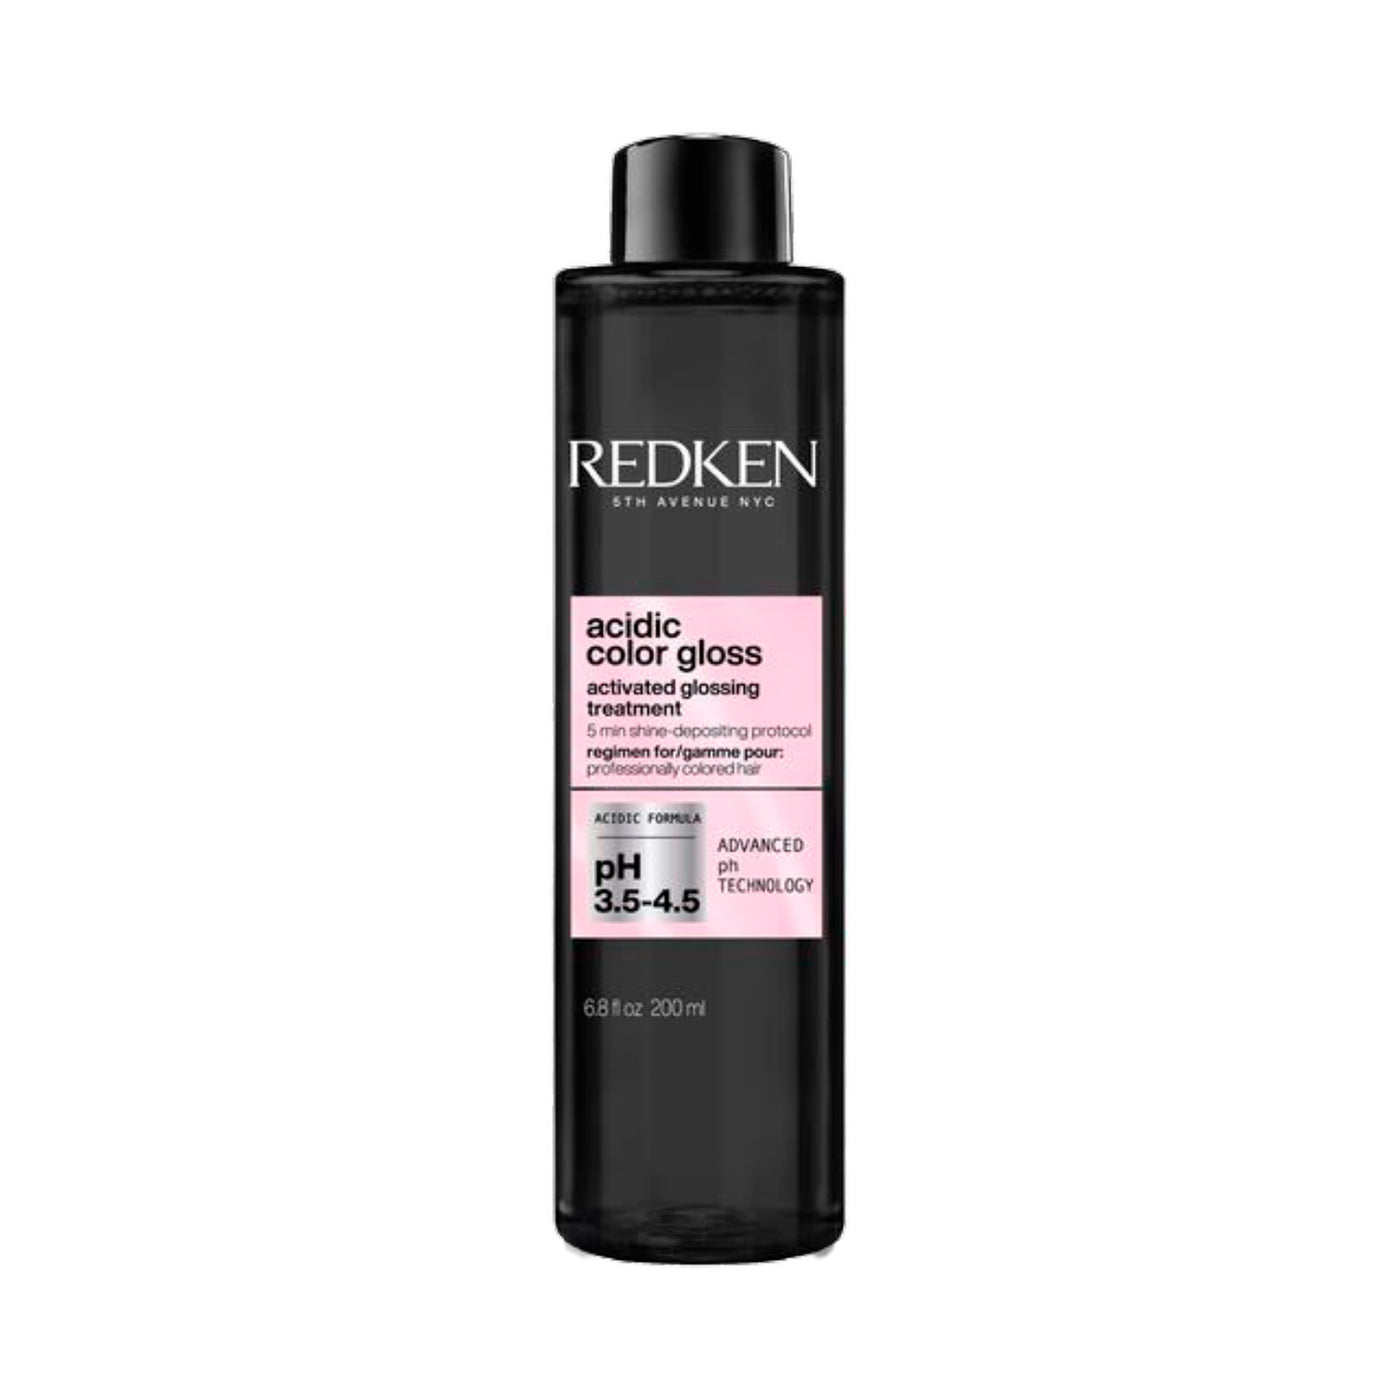 Redken - Acidic Color Gloss Treatment